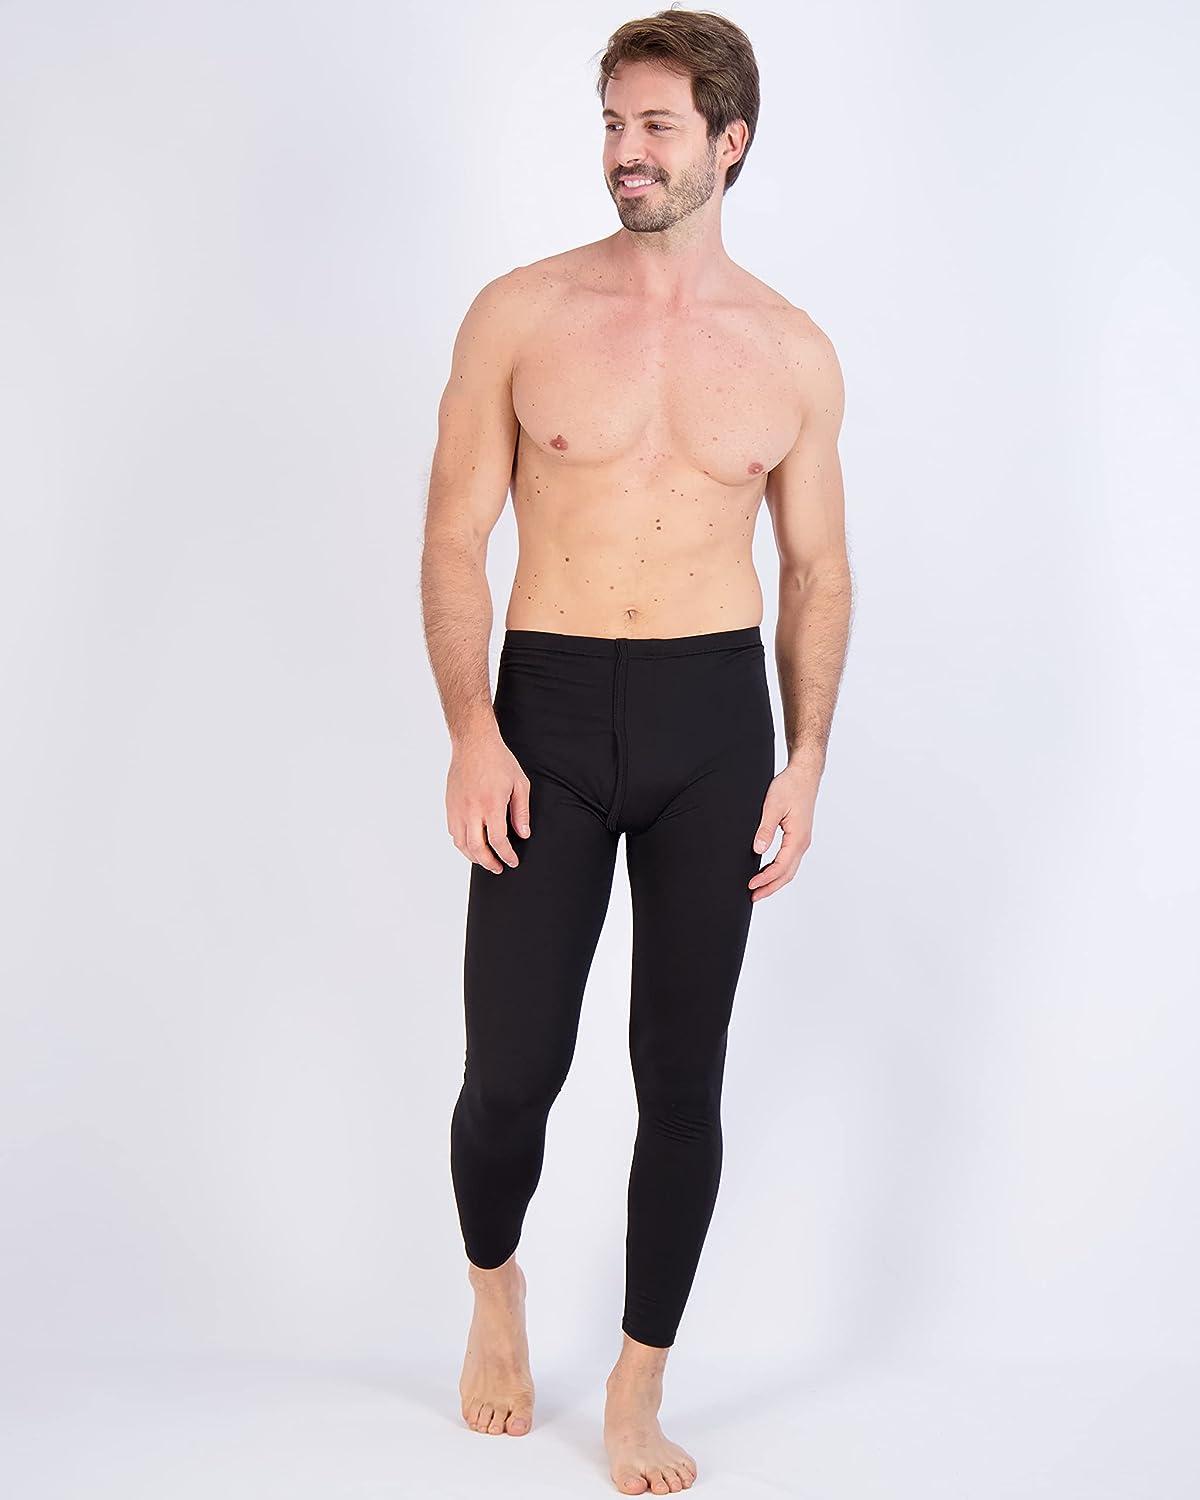 Men's Thermal Underwear, Base Layer